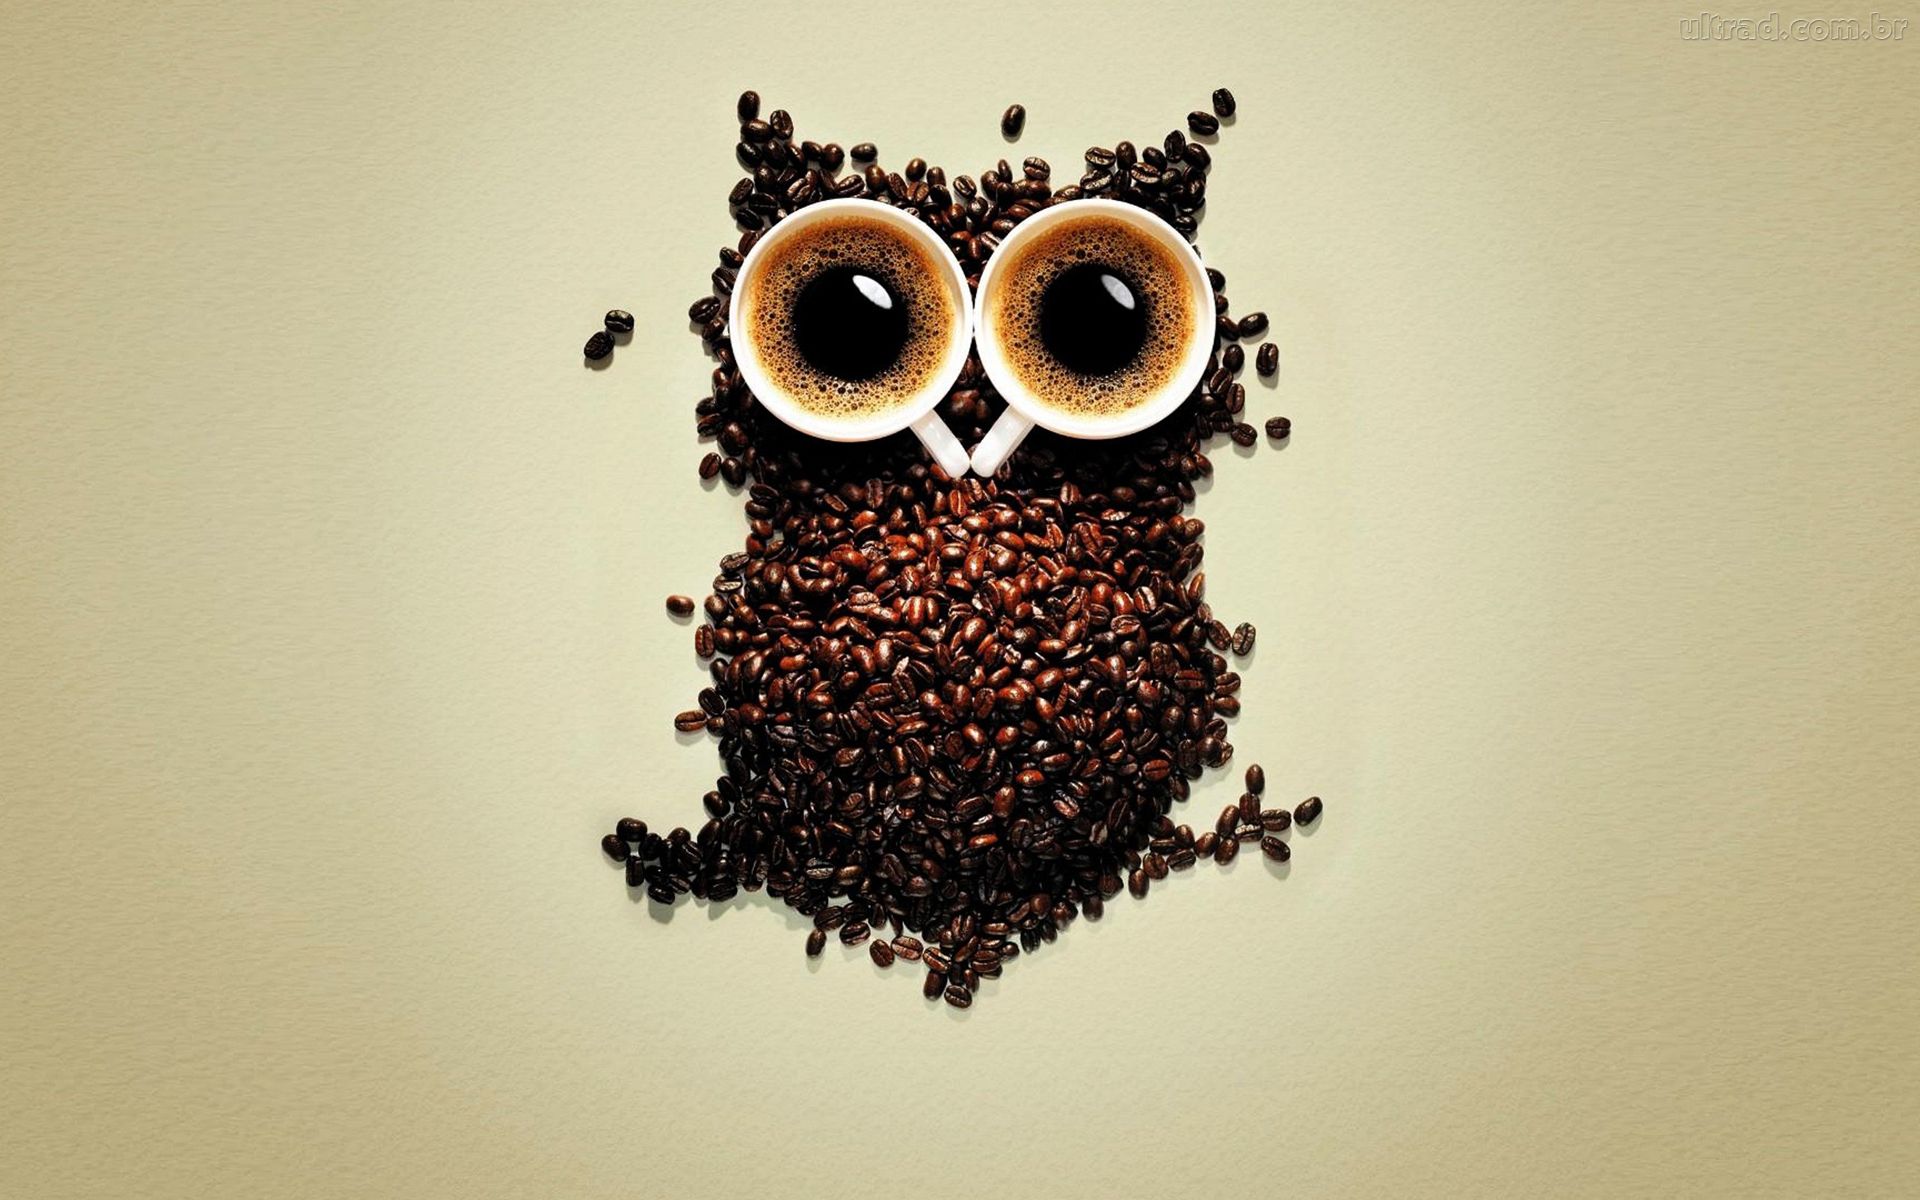 Owl Coffee Art Wallpaper